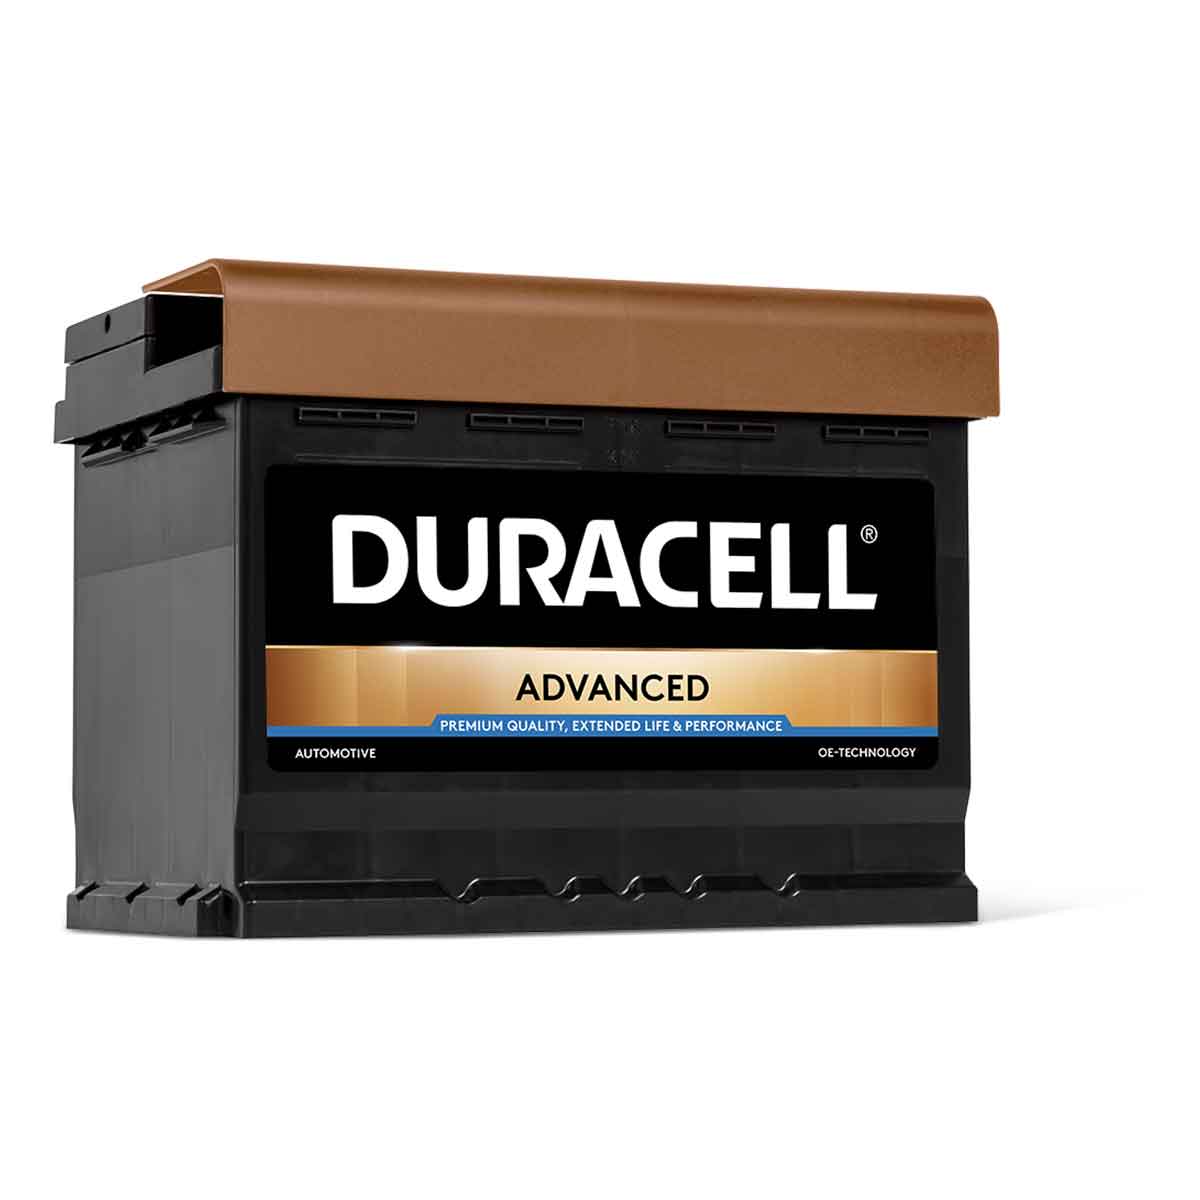 Duracell-Advanced_range.jpg